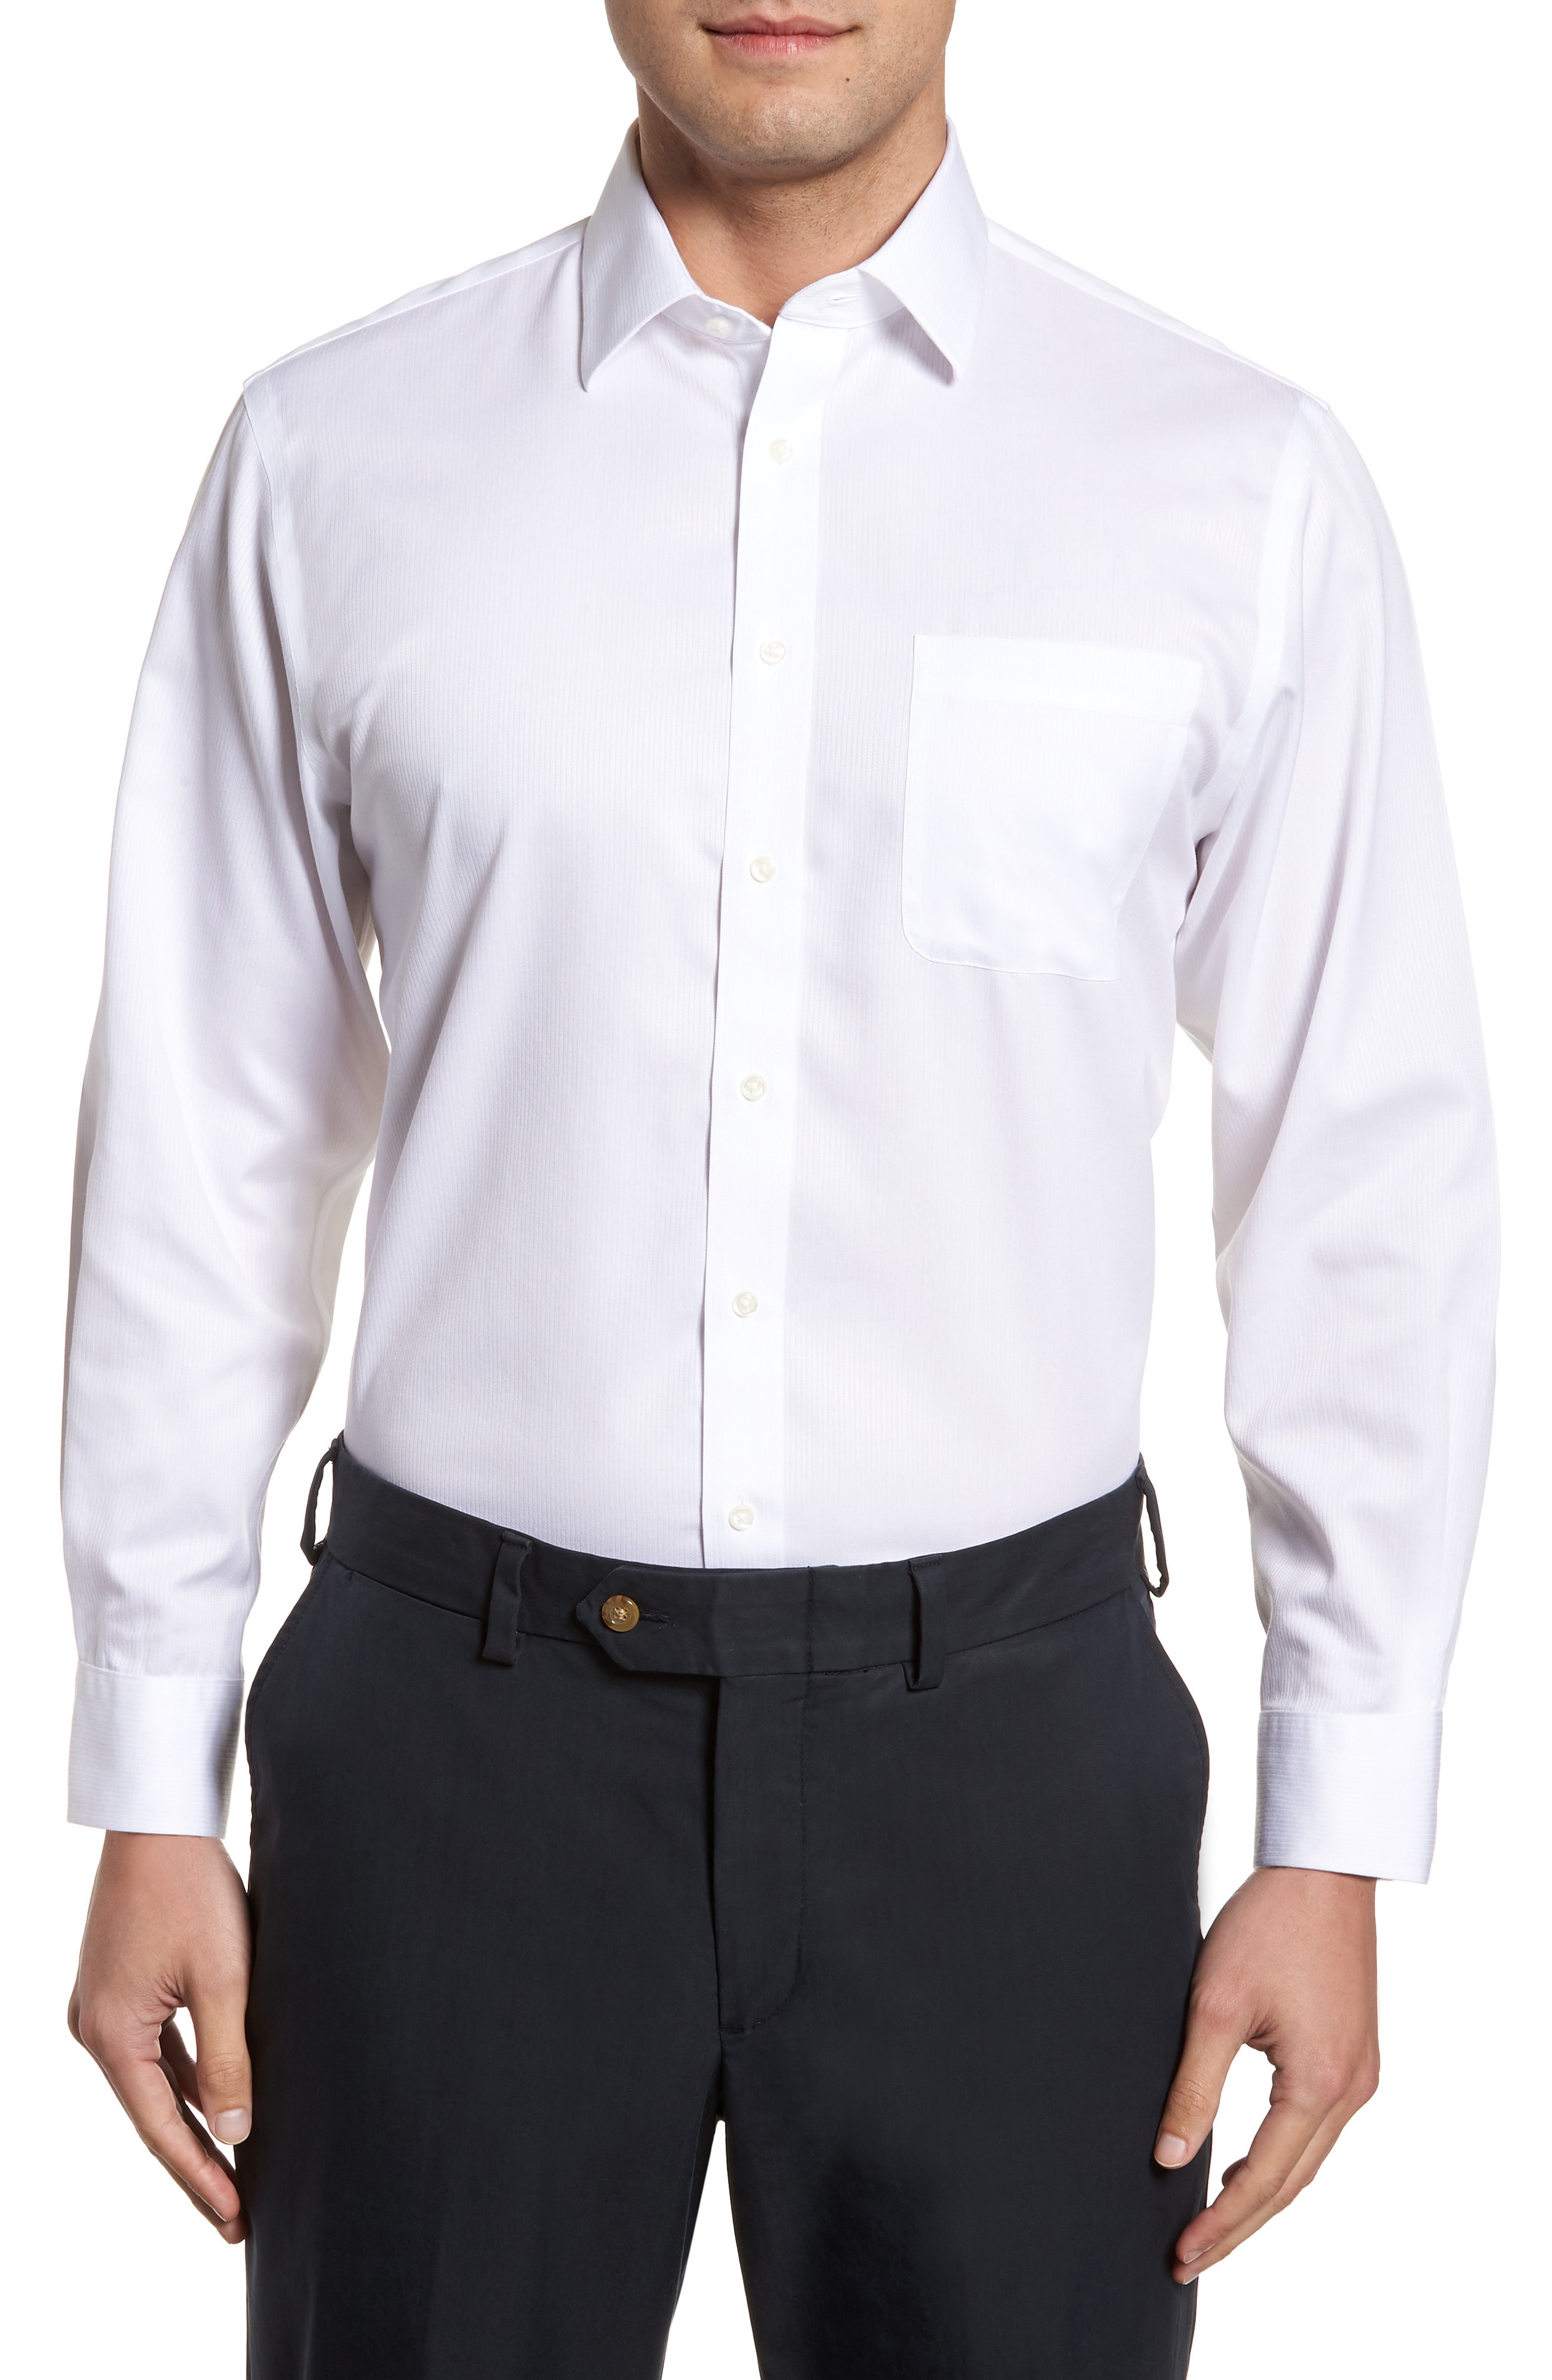 Men's XXXL (Neck Size 19-19.5) Big & Tall Shirts | Nordstrom